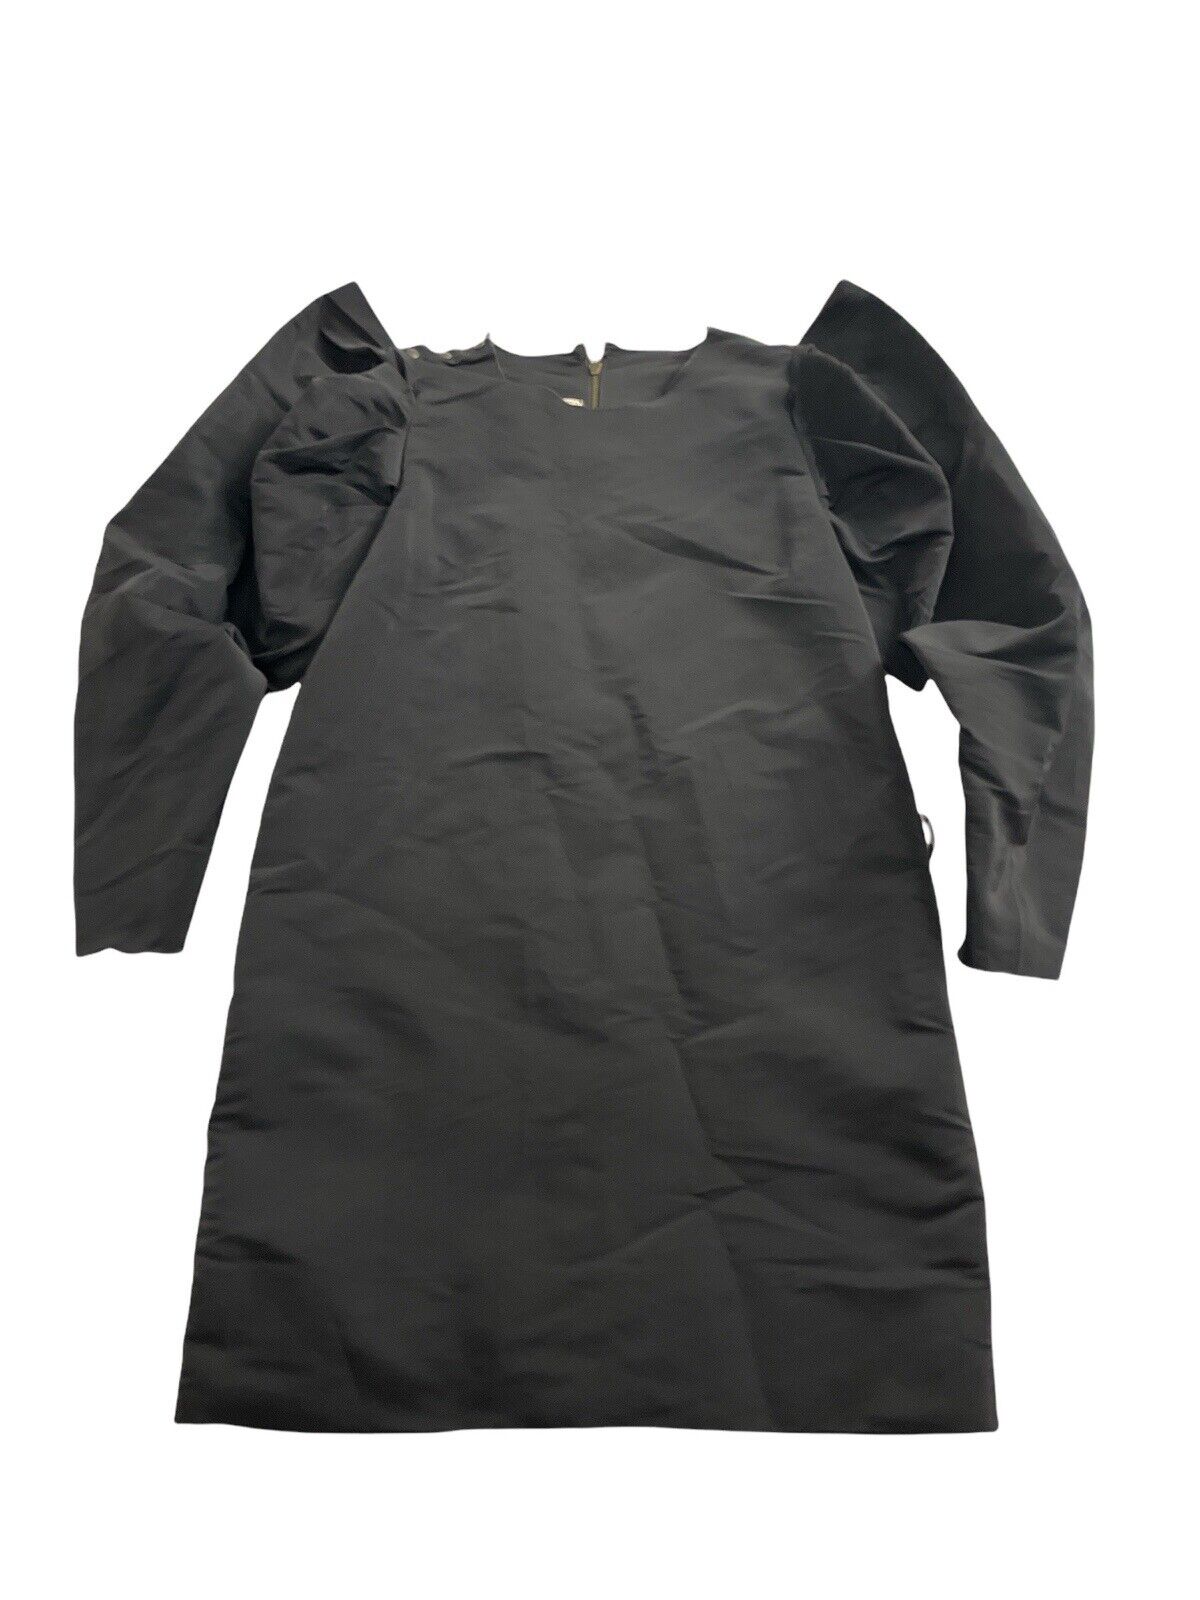 H&M Lanvin Sz 4 black structured taffeta dress